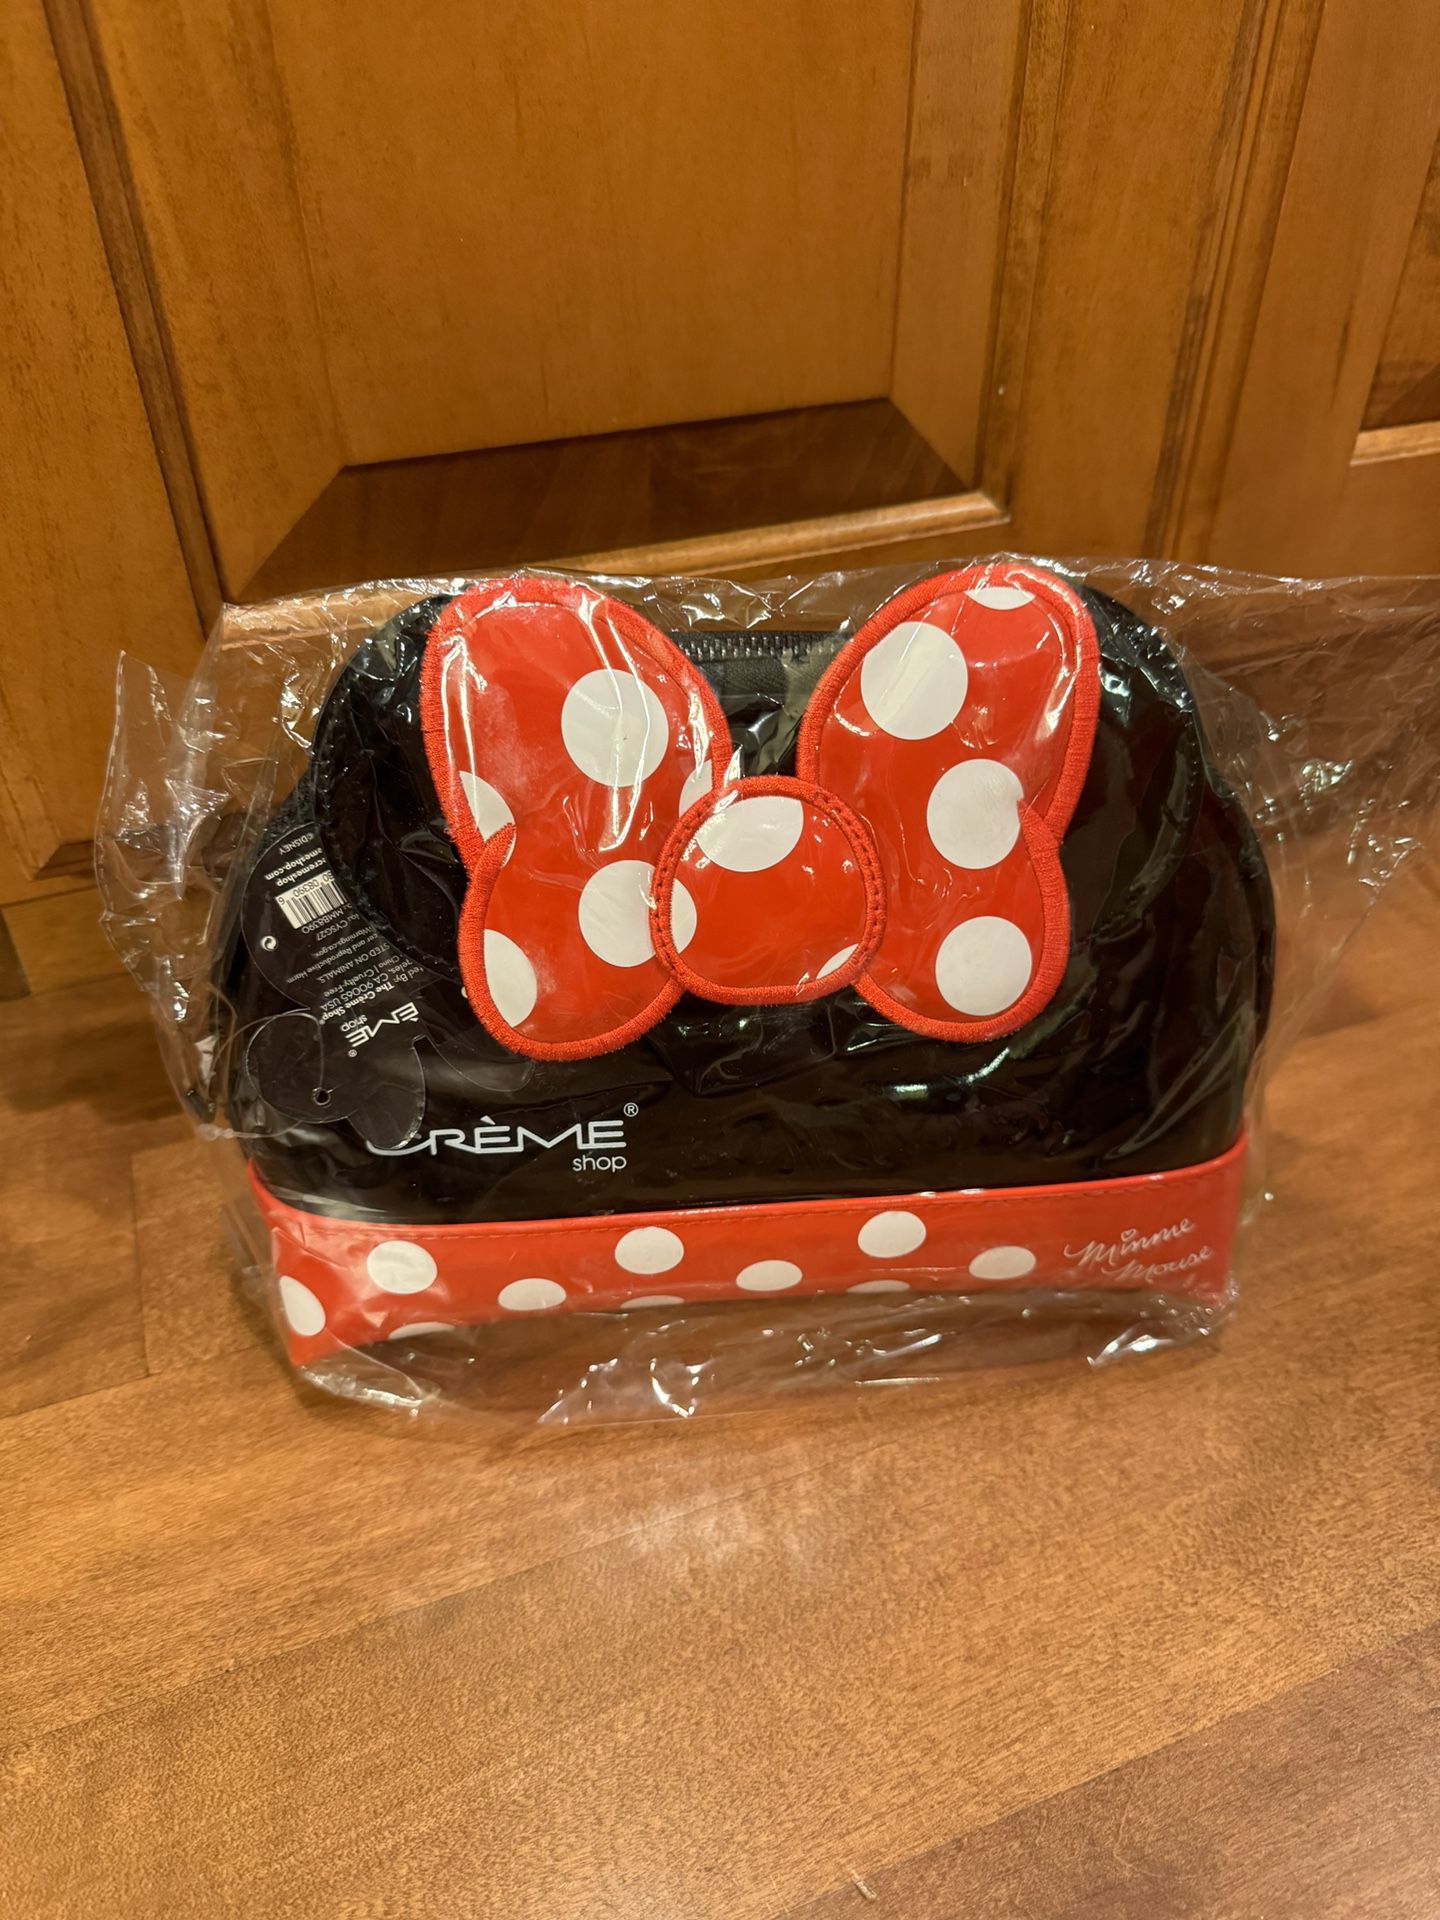 Disney Minne Mouse Creme Shop Makeup Bag Shipping Avaialbe 